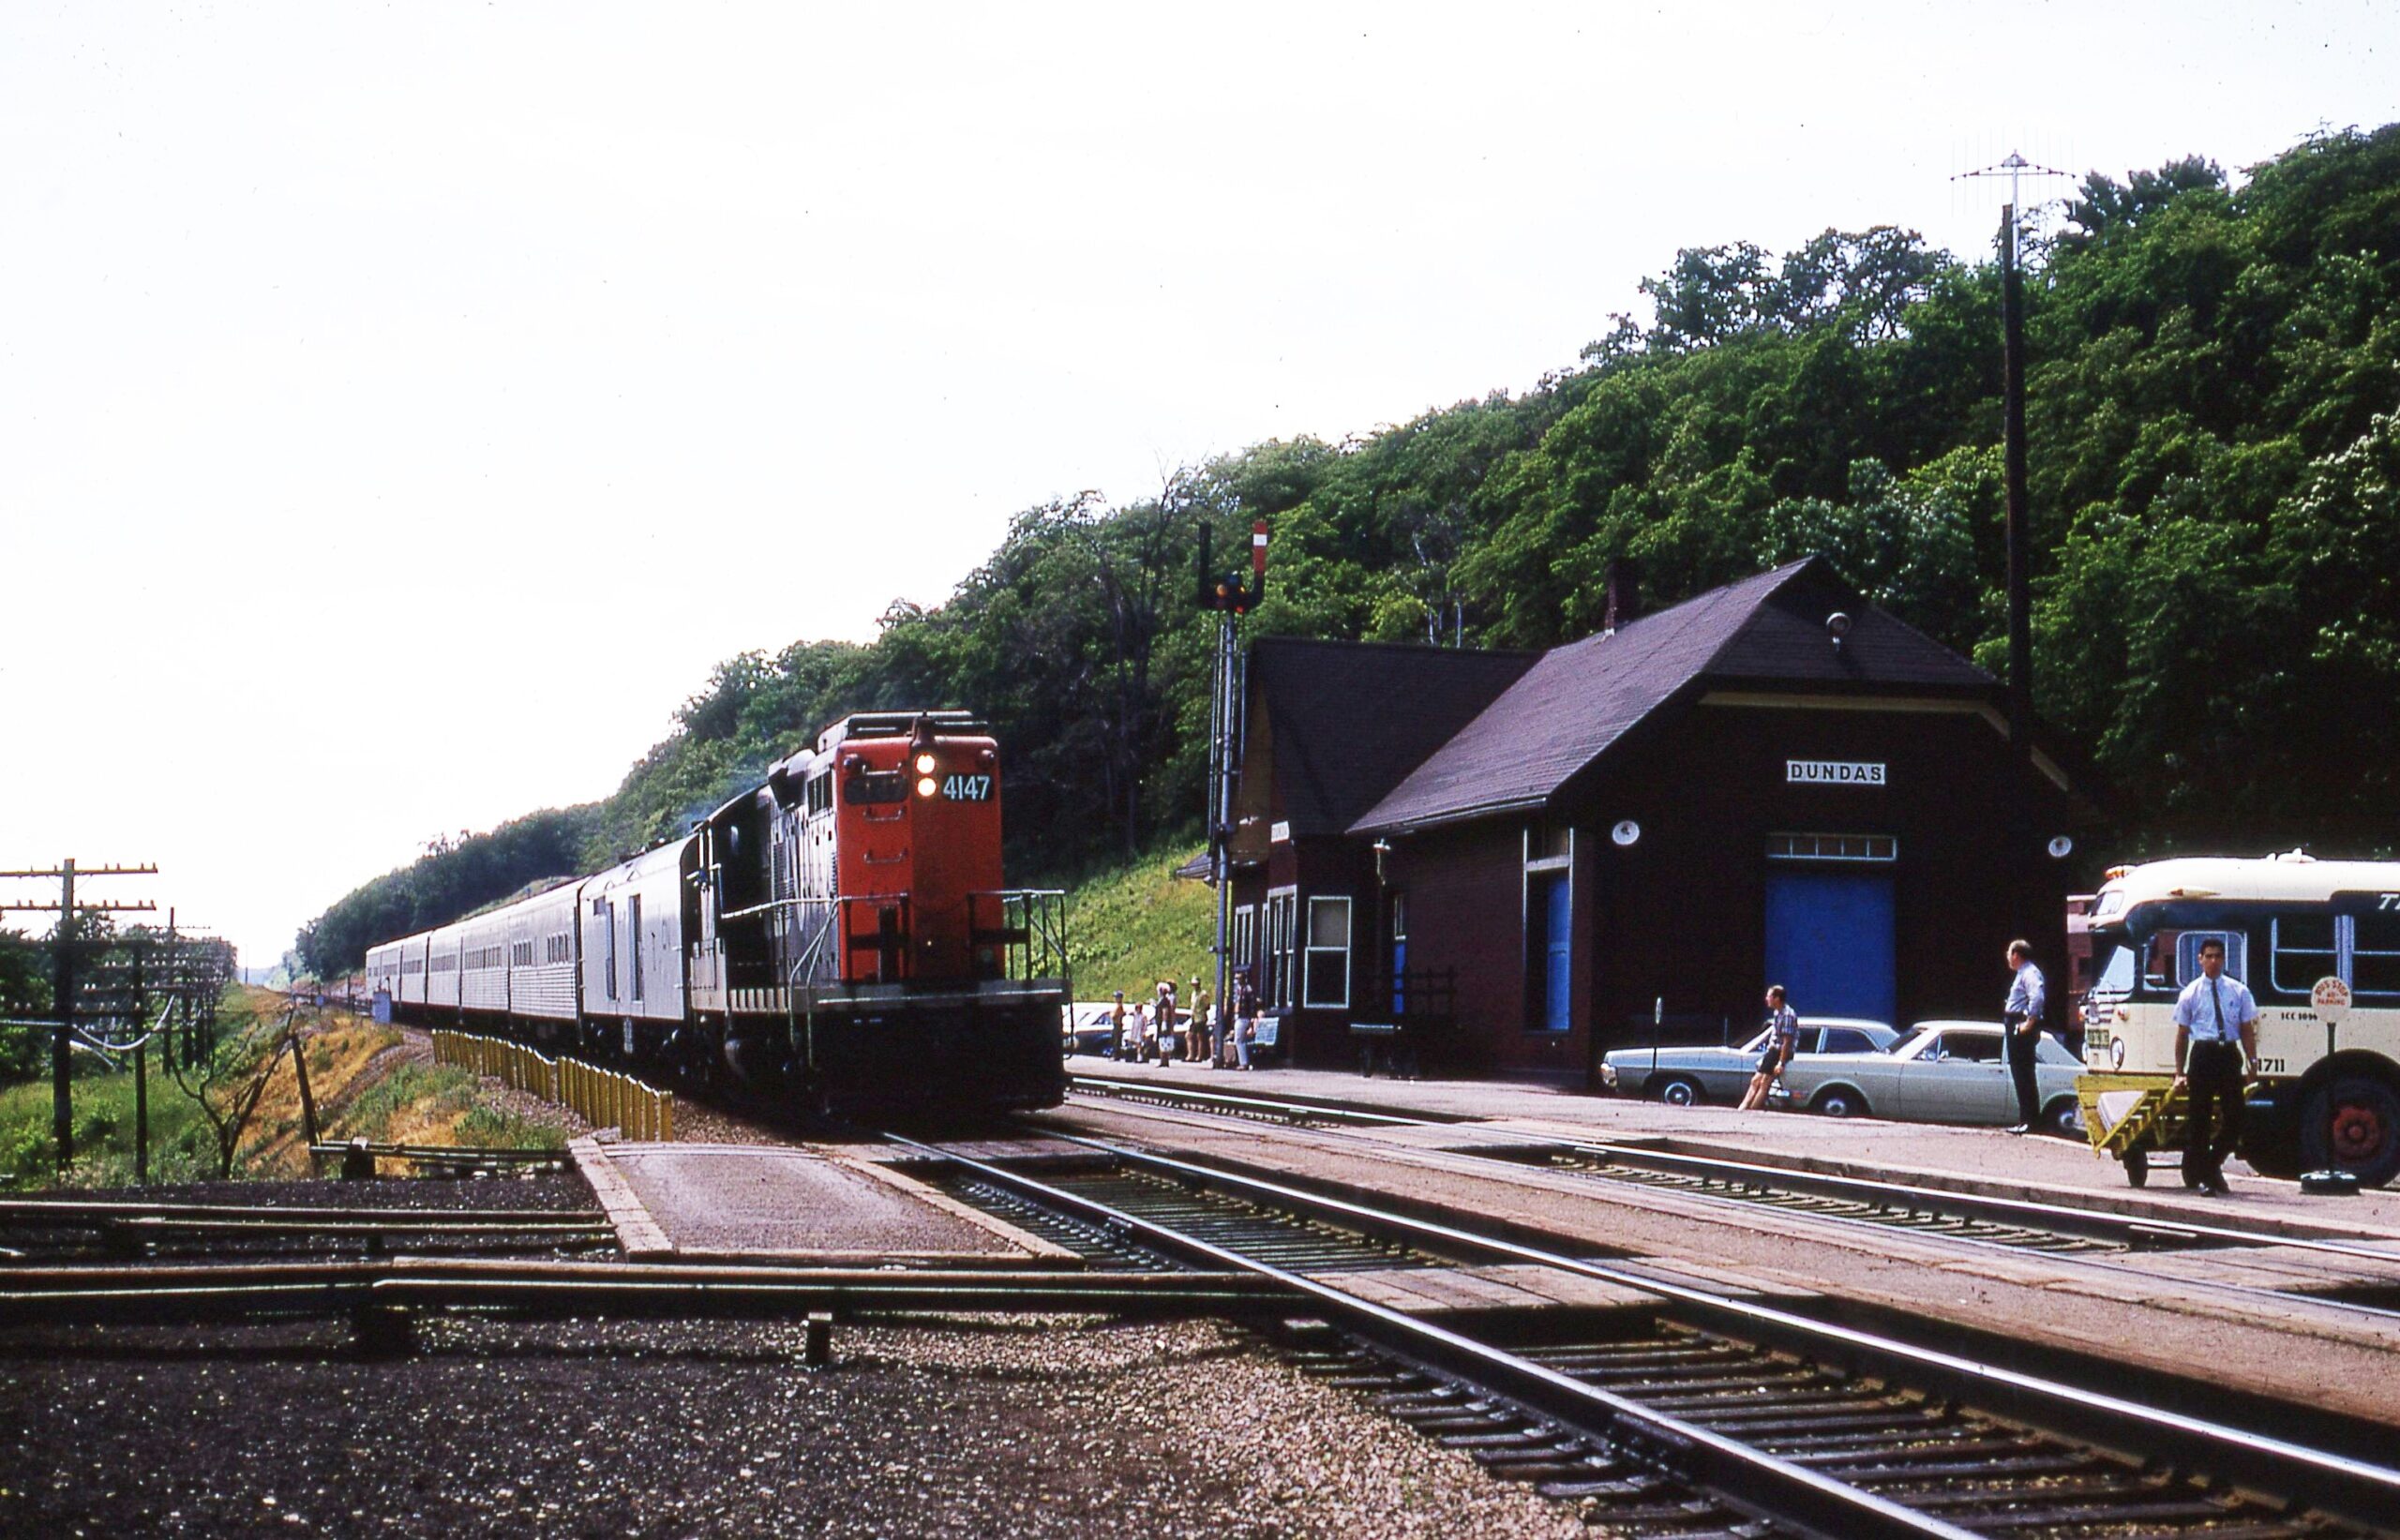 Canadien National | Dundas, Ontario | GMC Class GP9 #4147 | Passenger train | Dundas Passenger Station | July 6, 1969 | Dave McKay photograph | Steve Timko collection